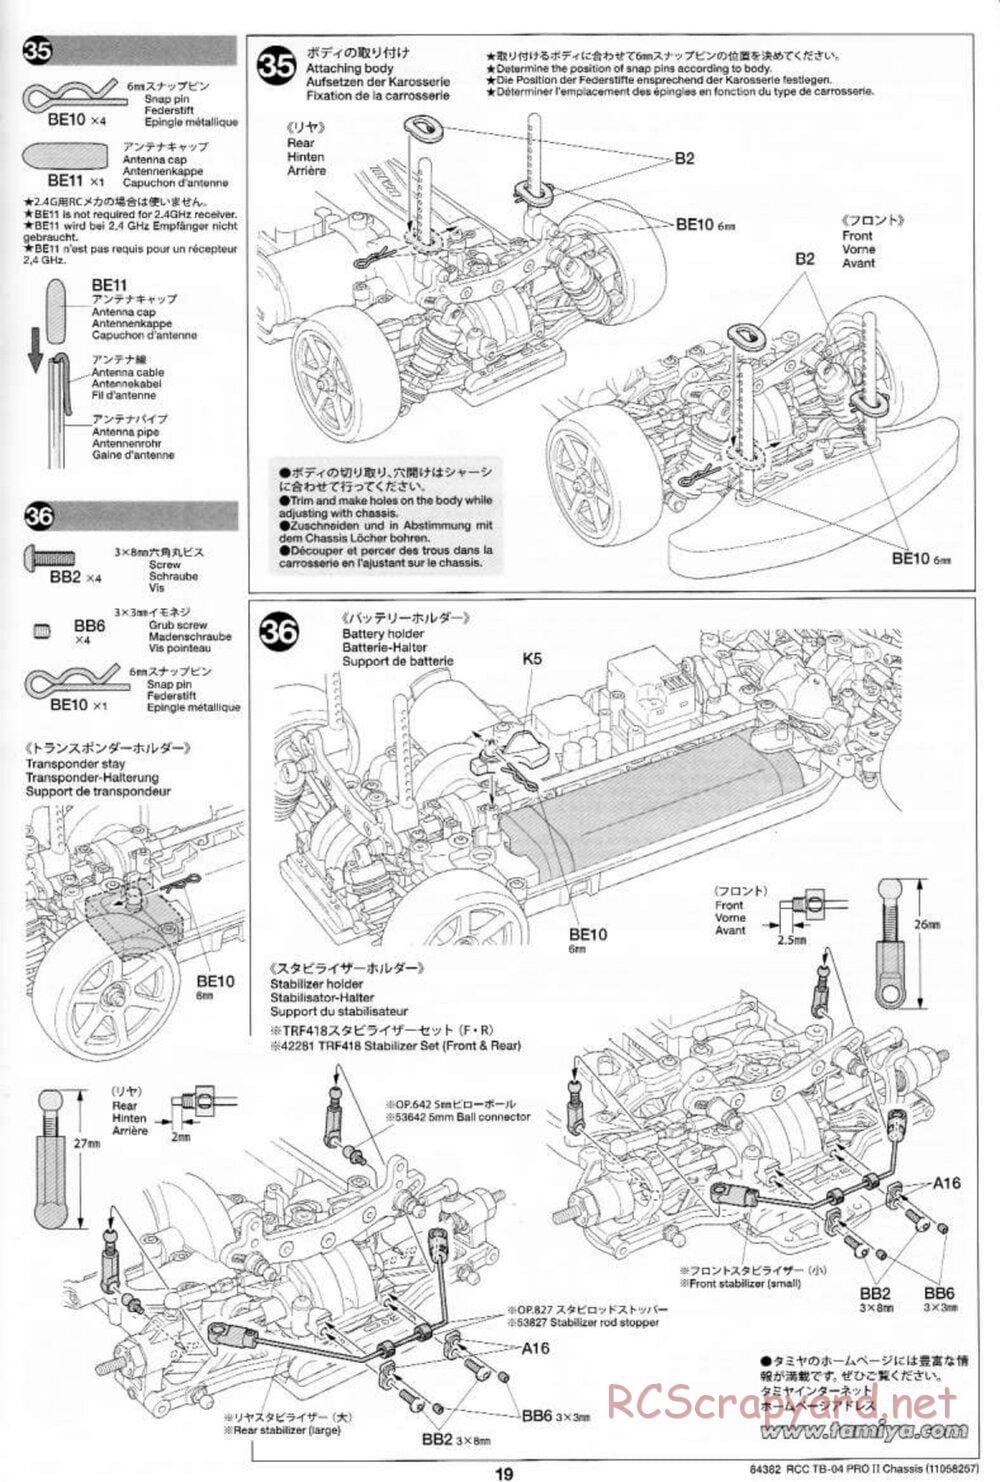 Tamiya - TB-04 Pro II Chassis - Manual - Page 19